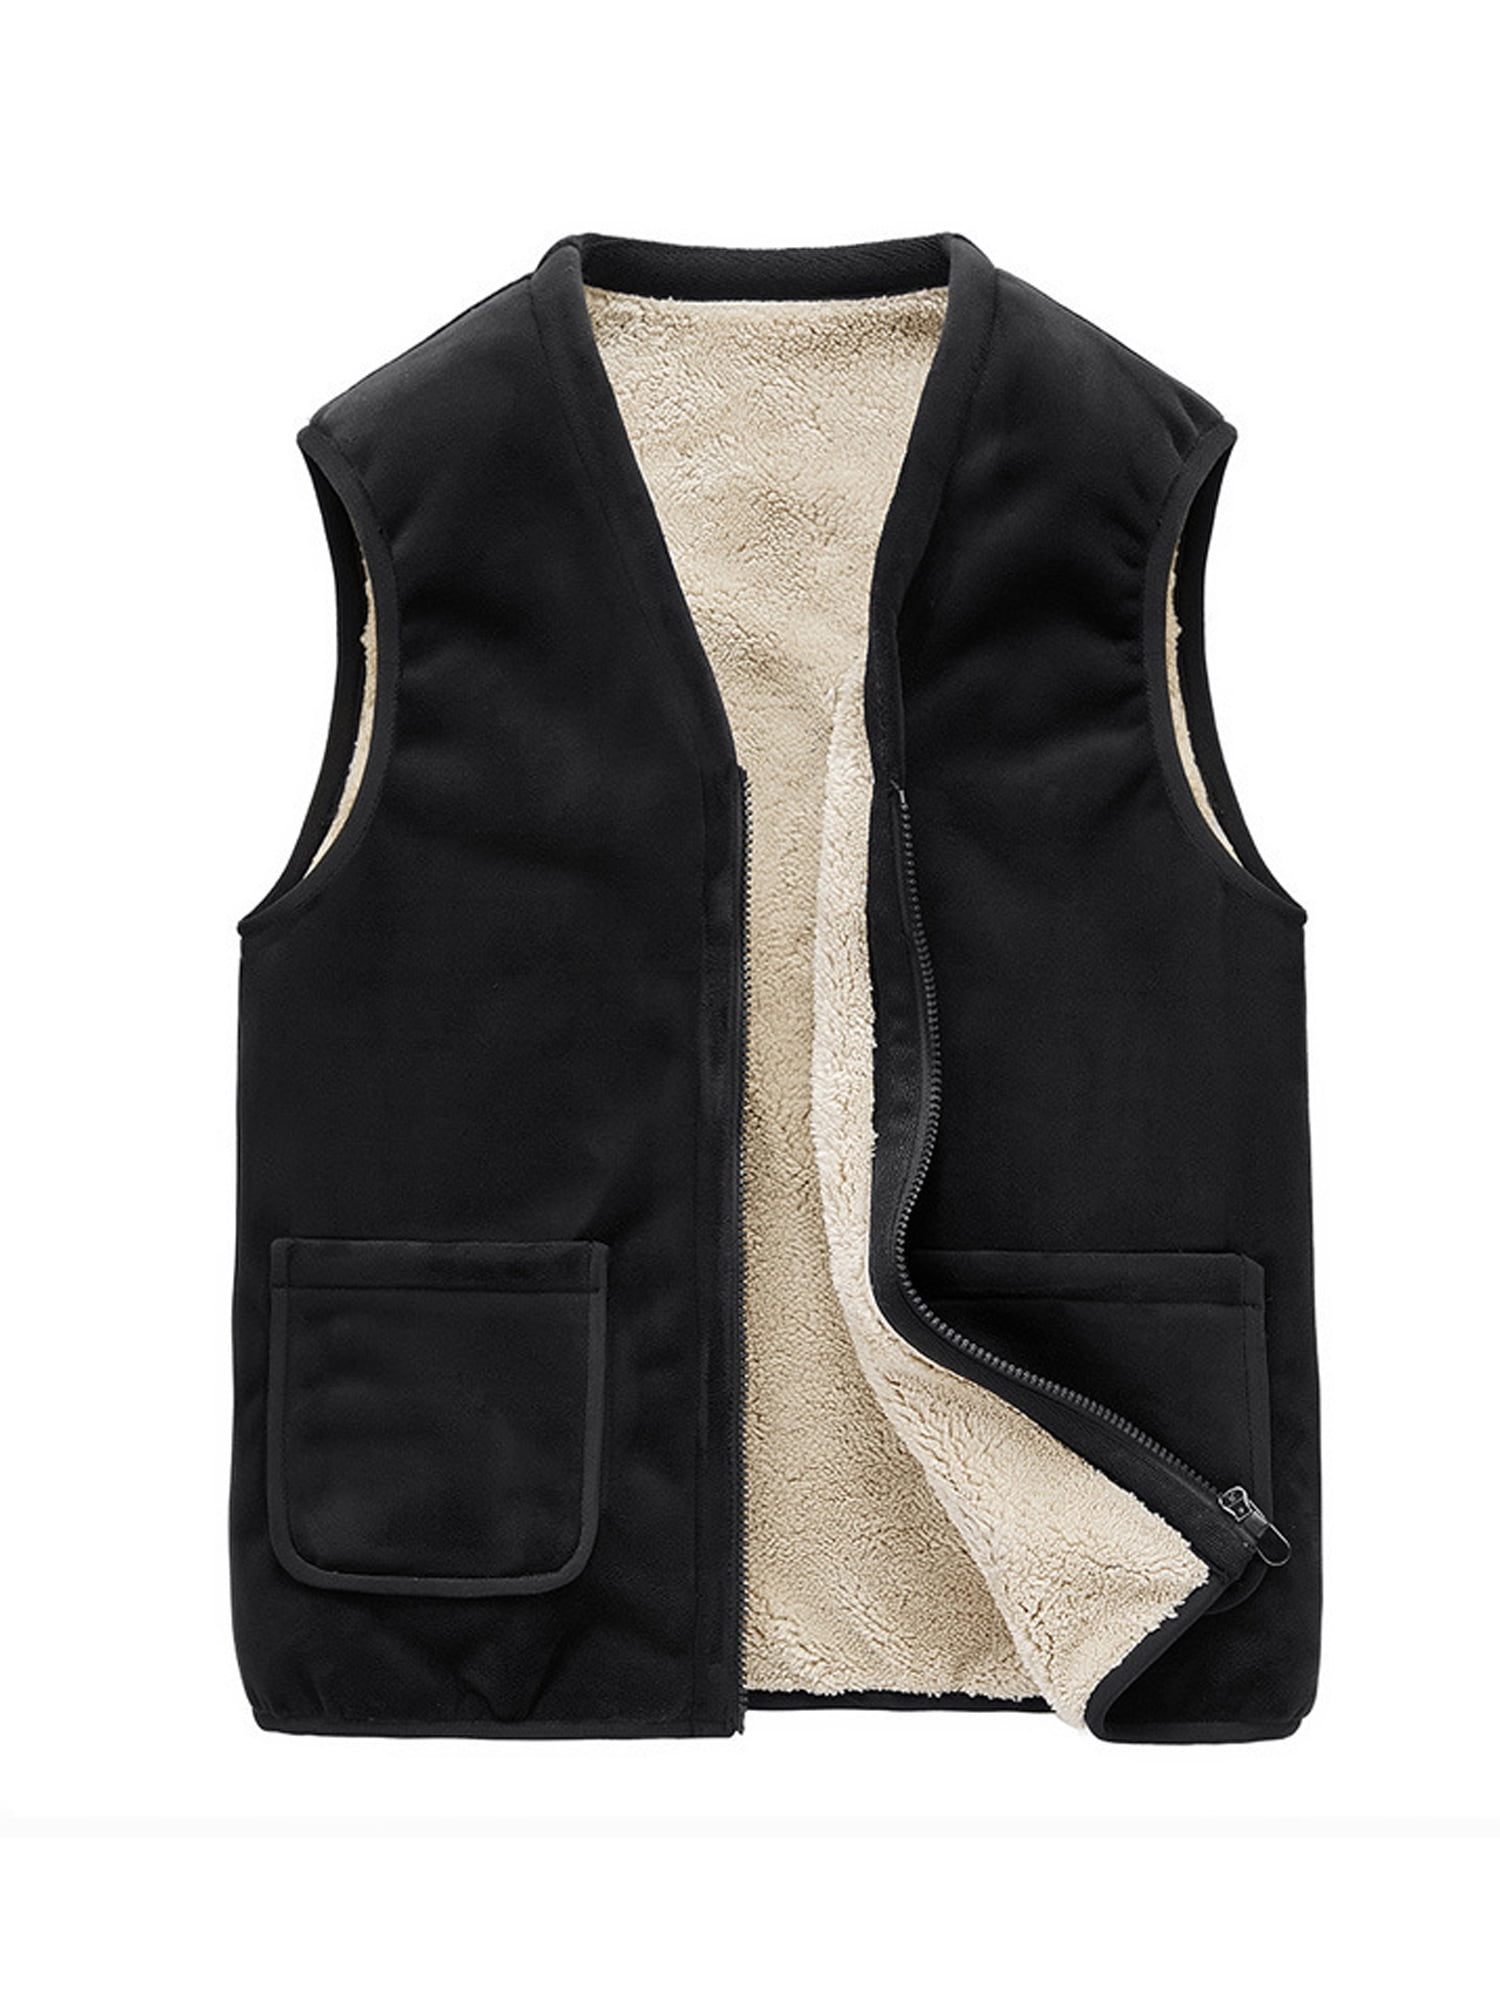 Capreze Fluffy Jacket Coat Vest With Pockets for Men Fuzzy Fleece ...